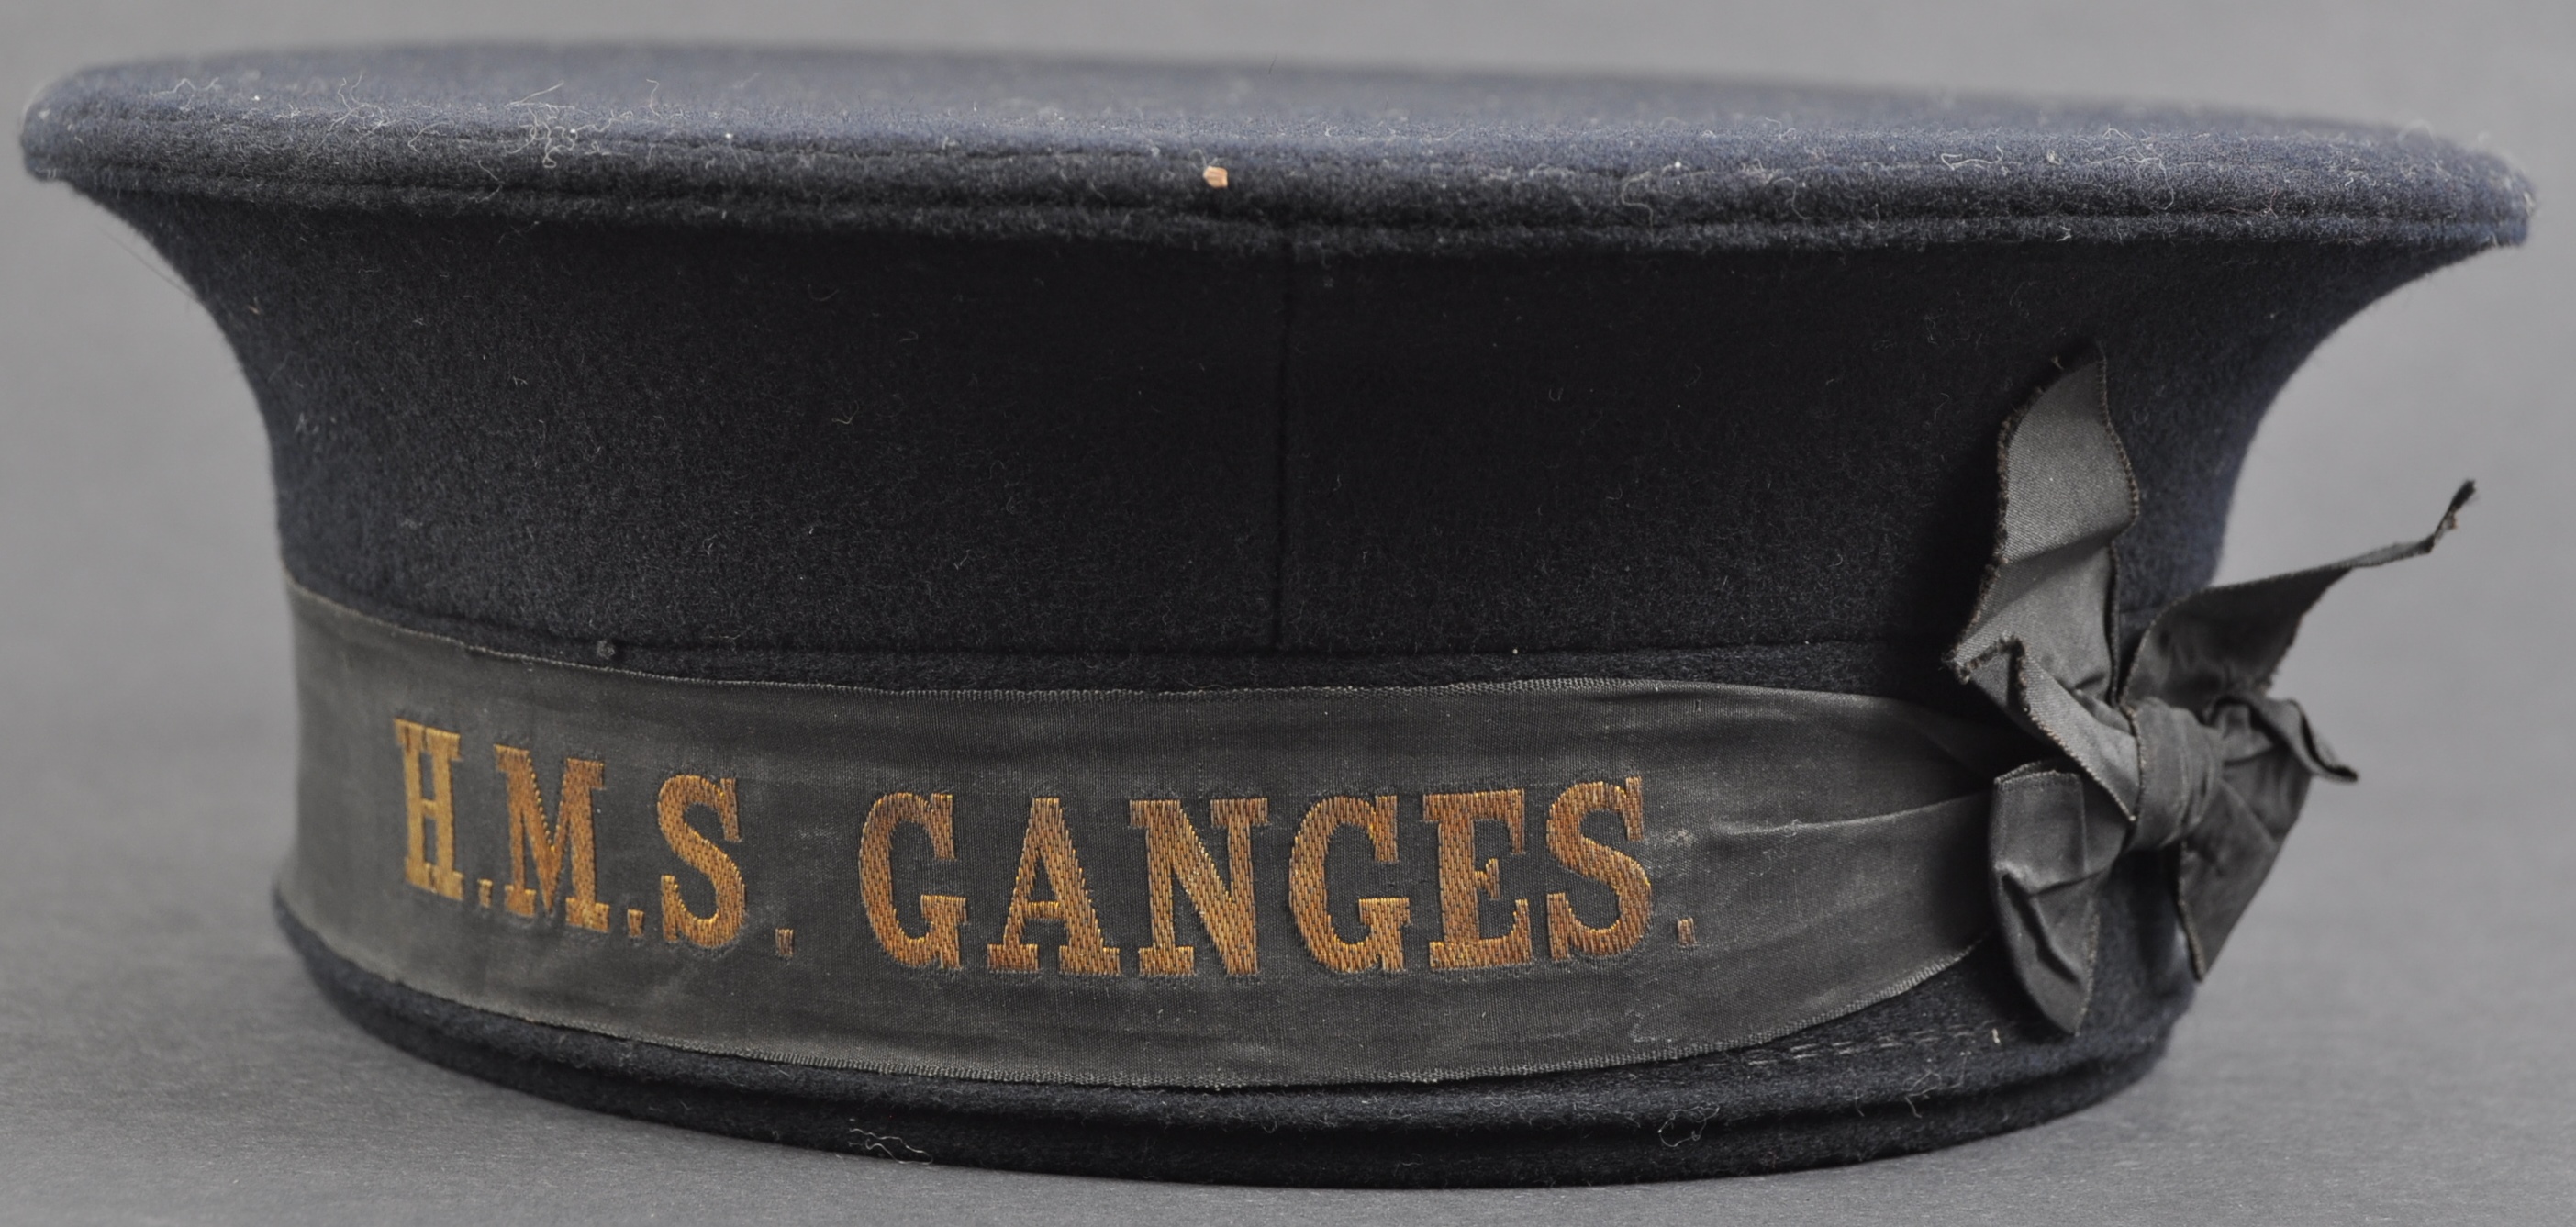 WWII SECOND WORLD WAR INTEREST - HMS GANGES UNIFORM CAP